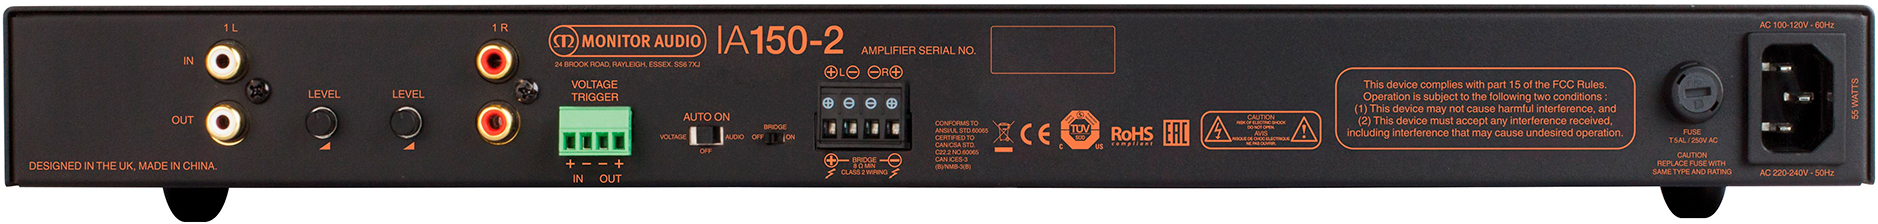 Monitor Audio IA150-2 задняя панель